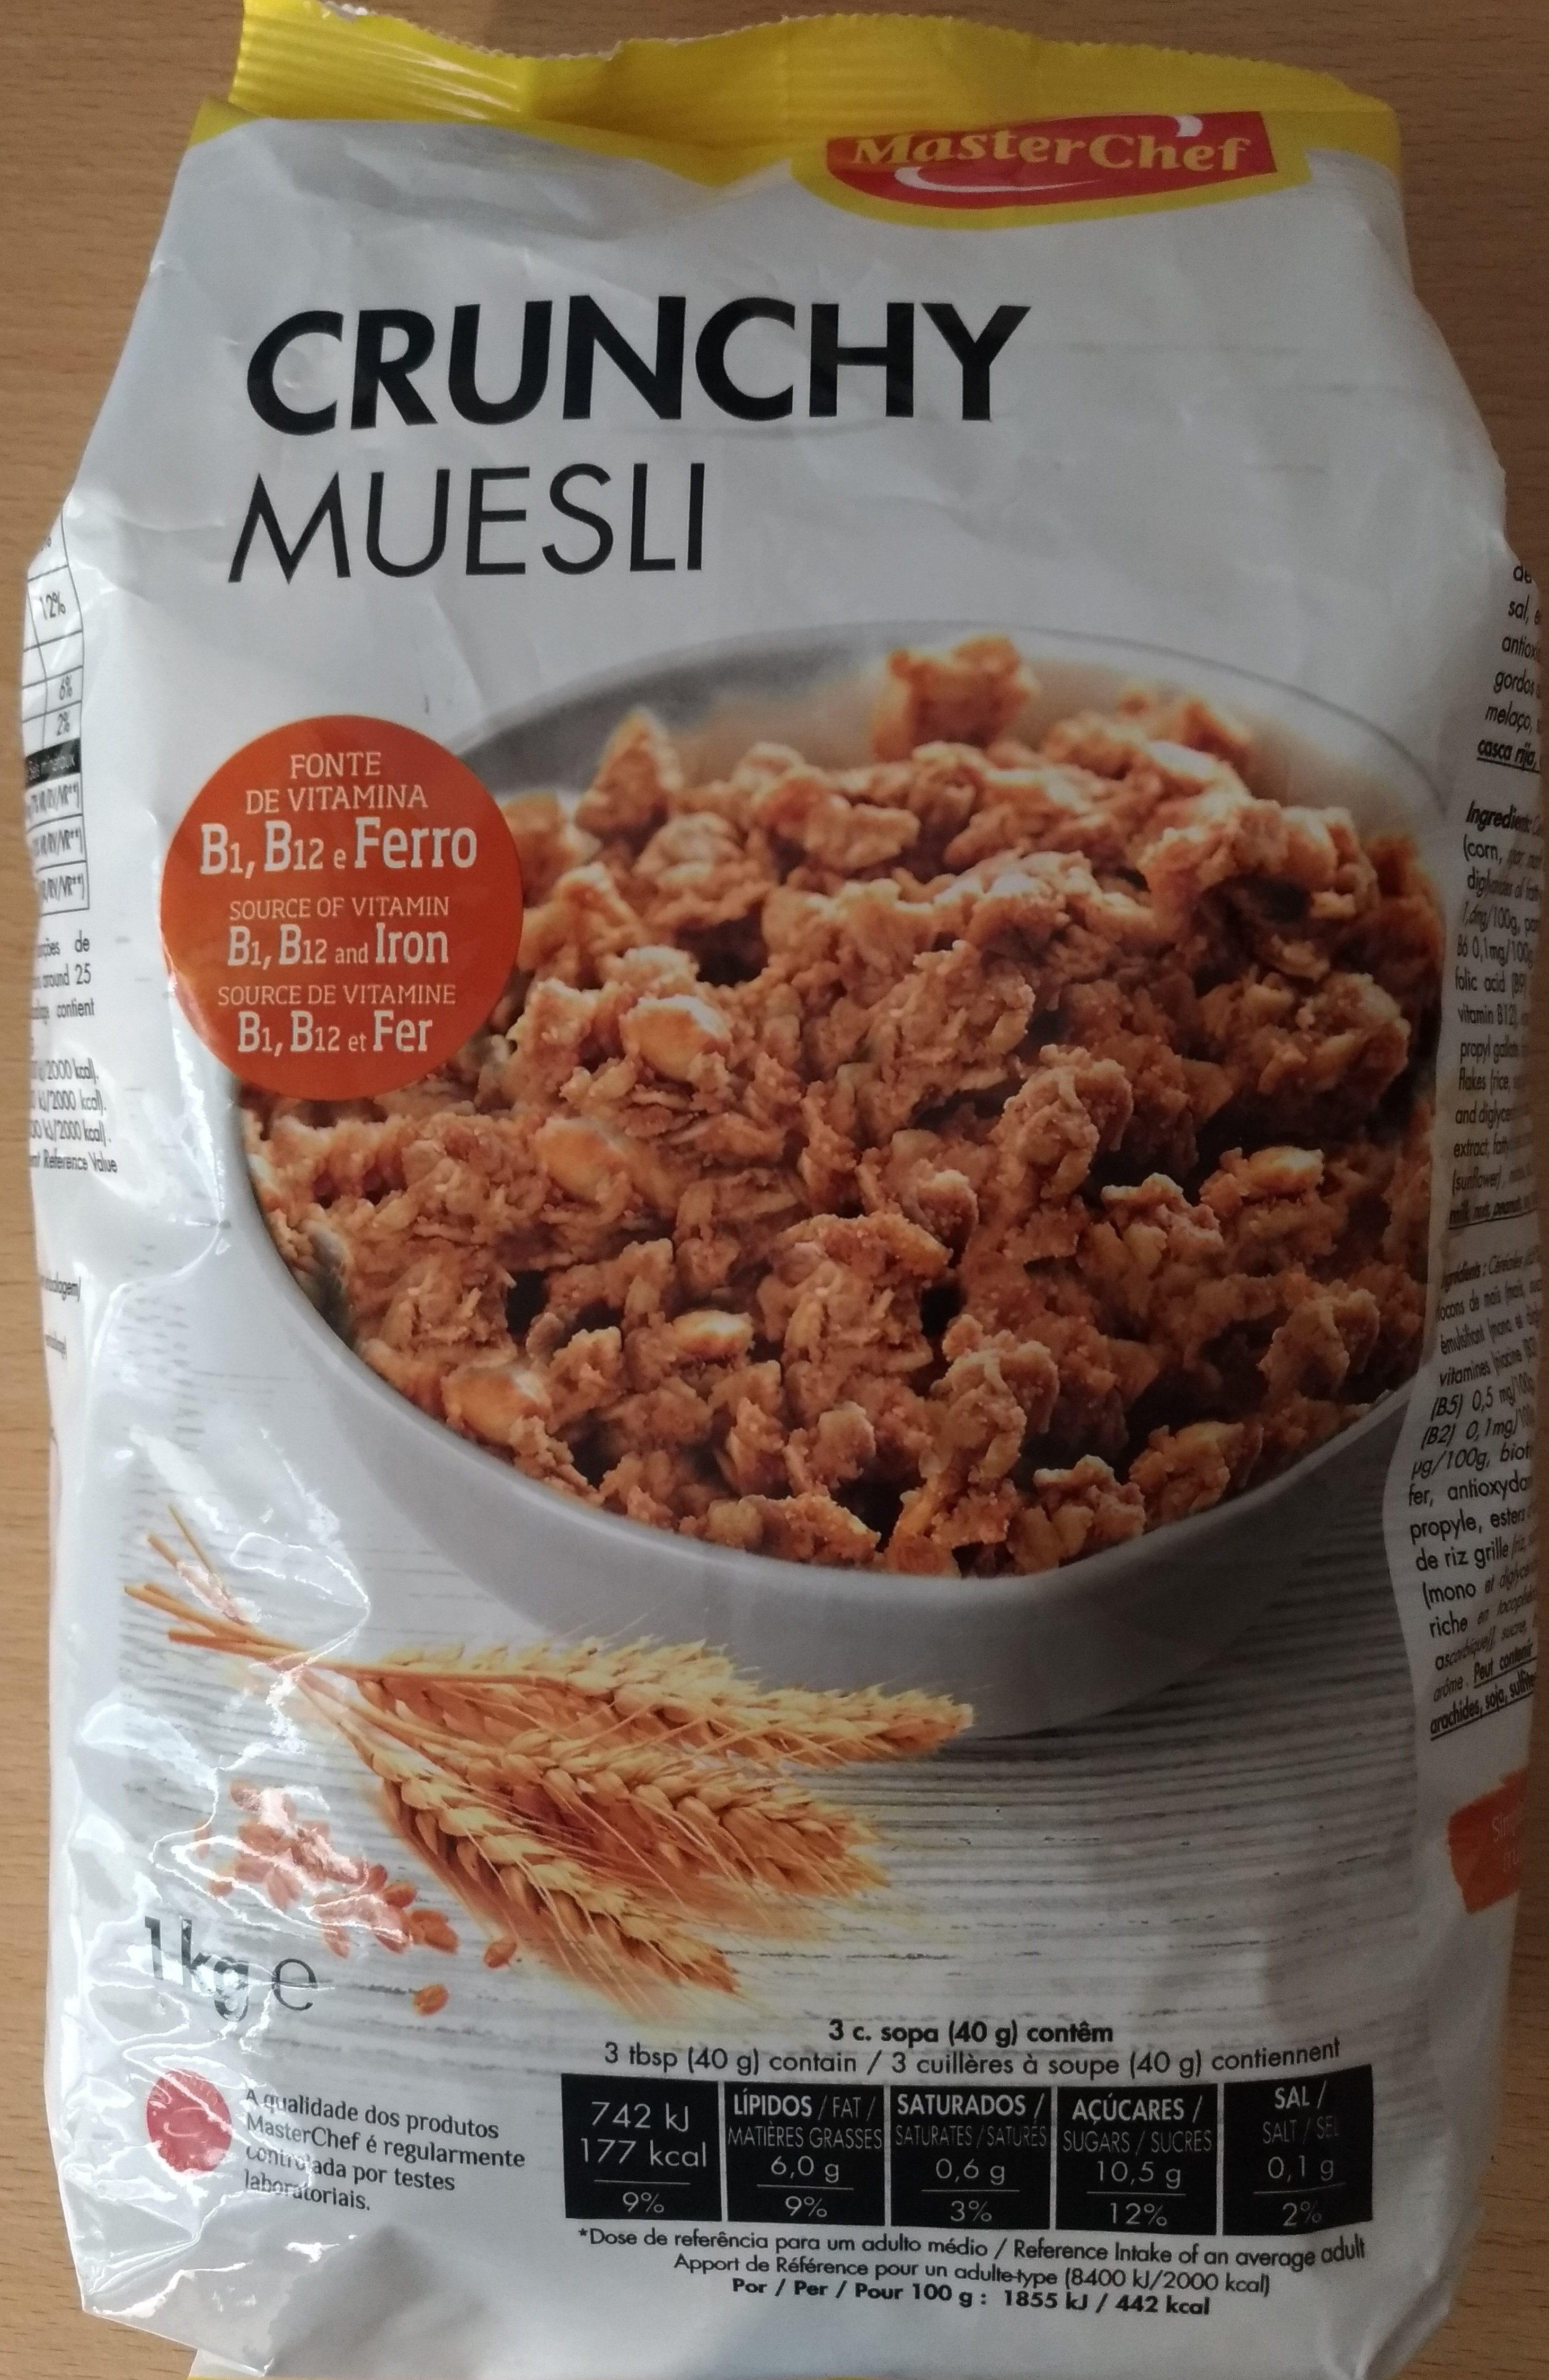 Crunchy muesli - Product - pt